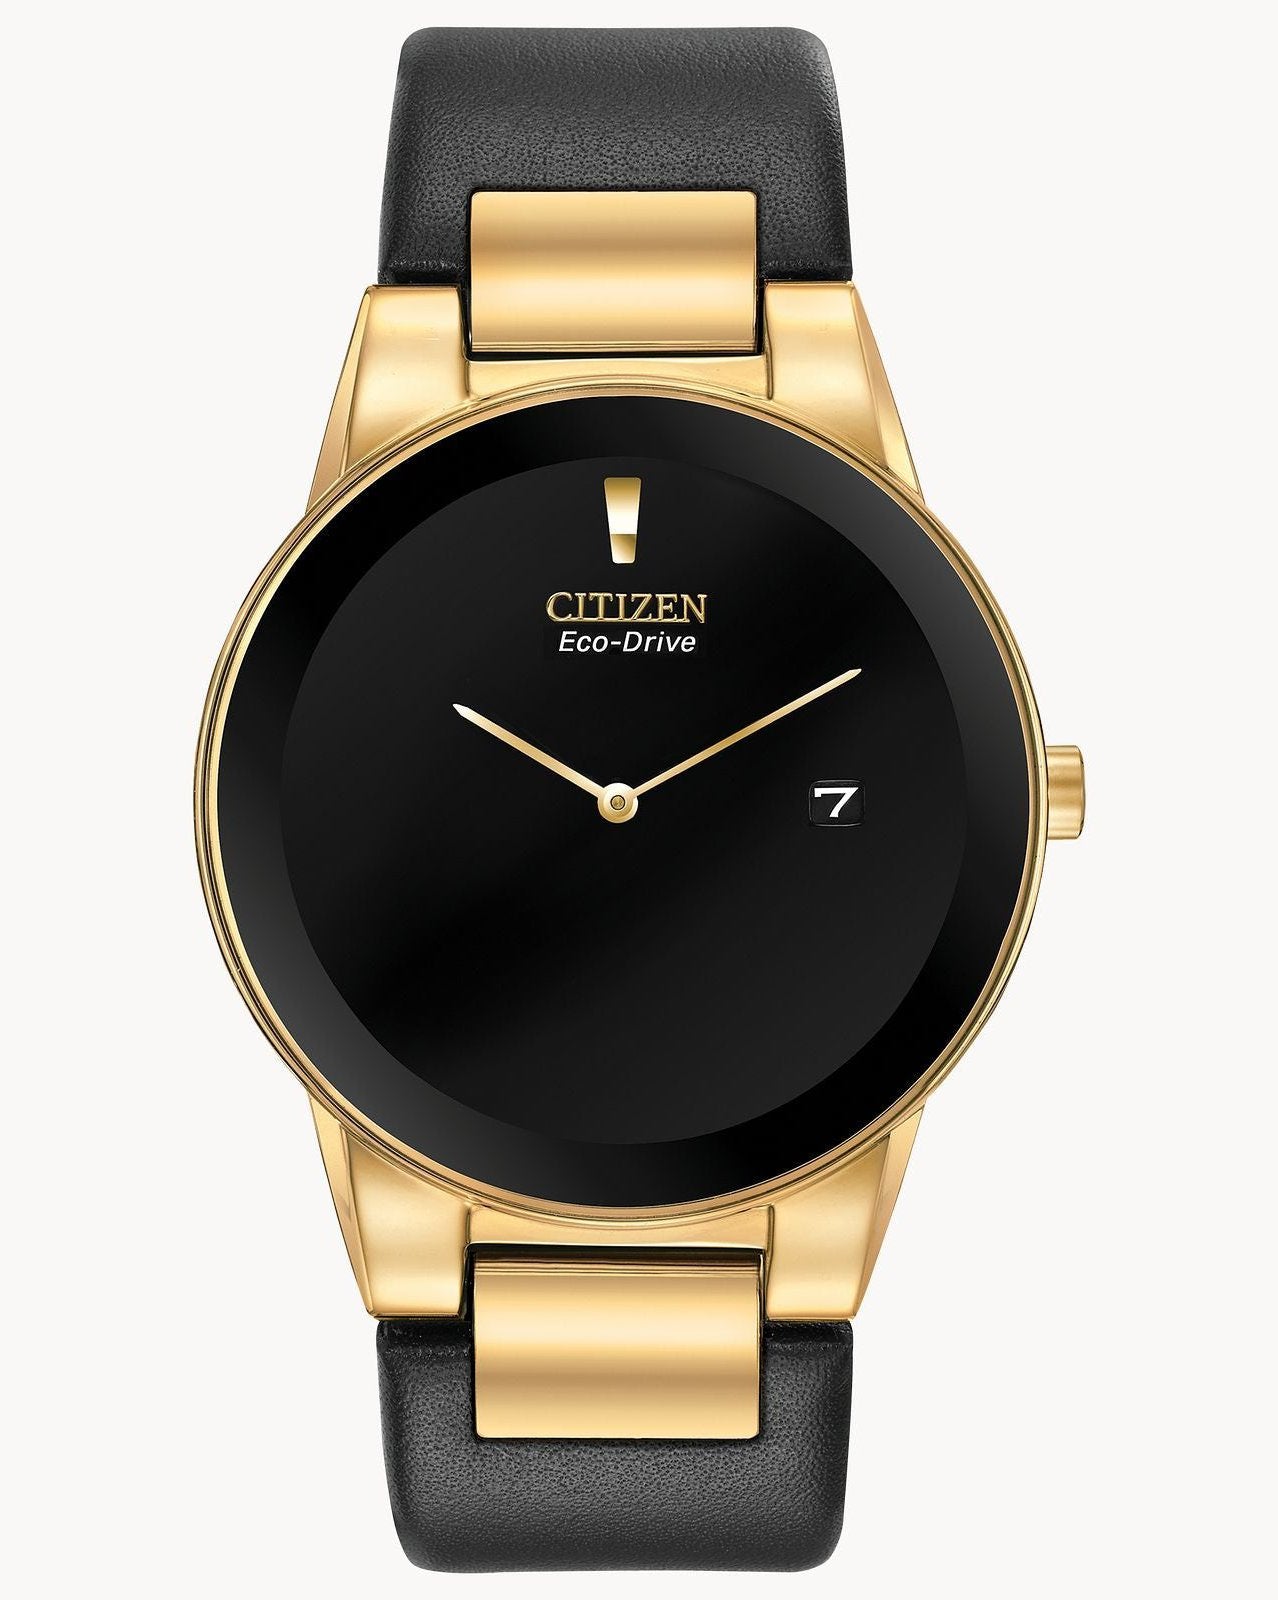 Citizen Eco-Drive Axiom Gold-Tone Watch (Model AU1062-05E)